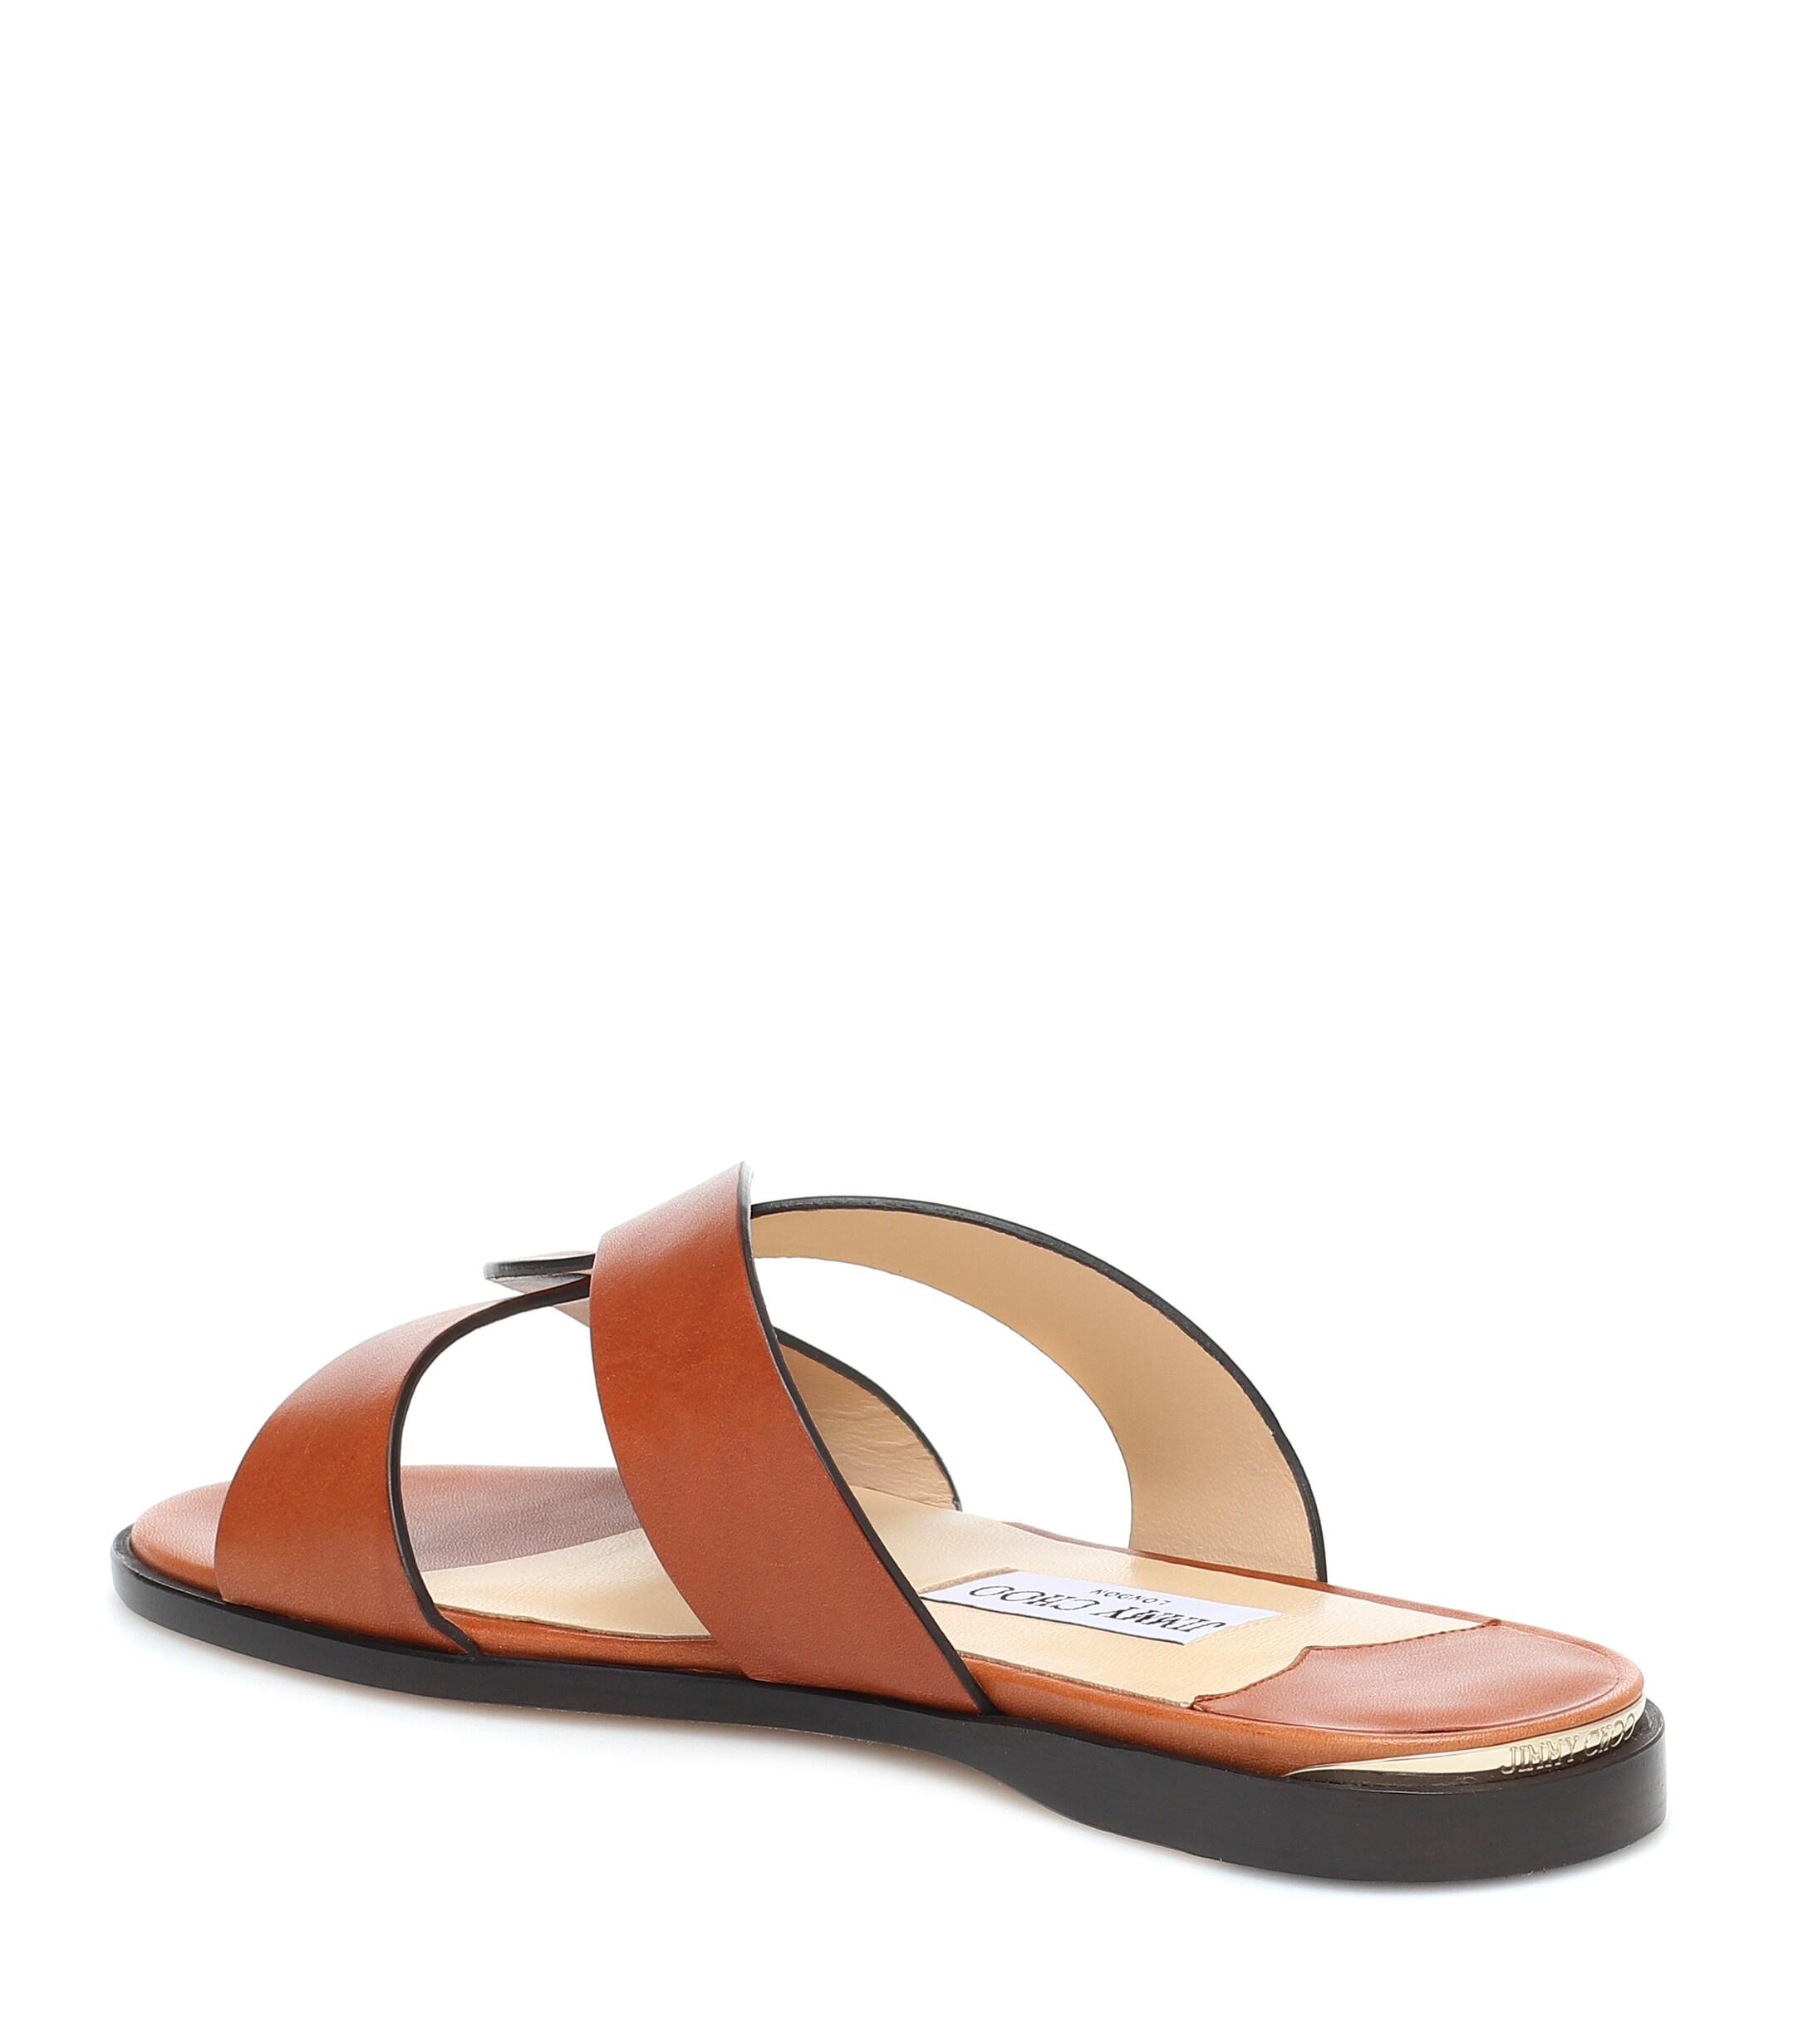 Jimmy Choo Atia Flat Leather Sandals in Brown - Lyst